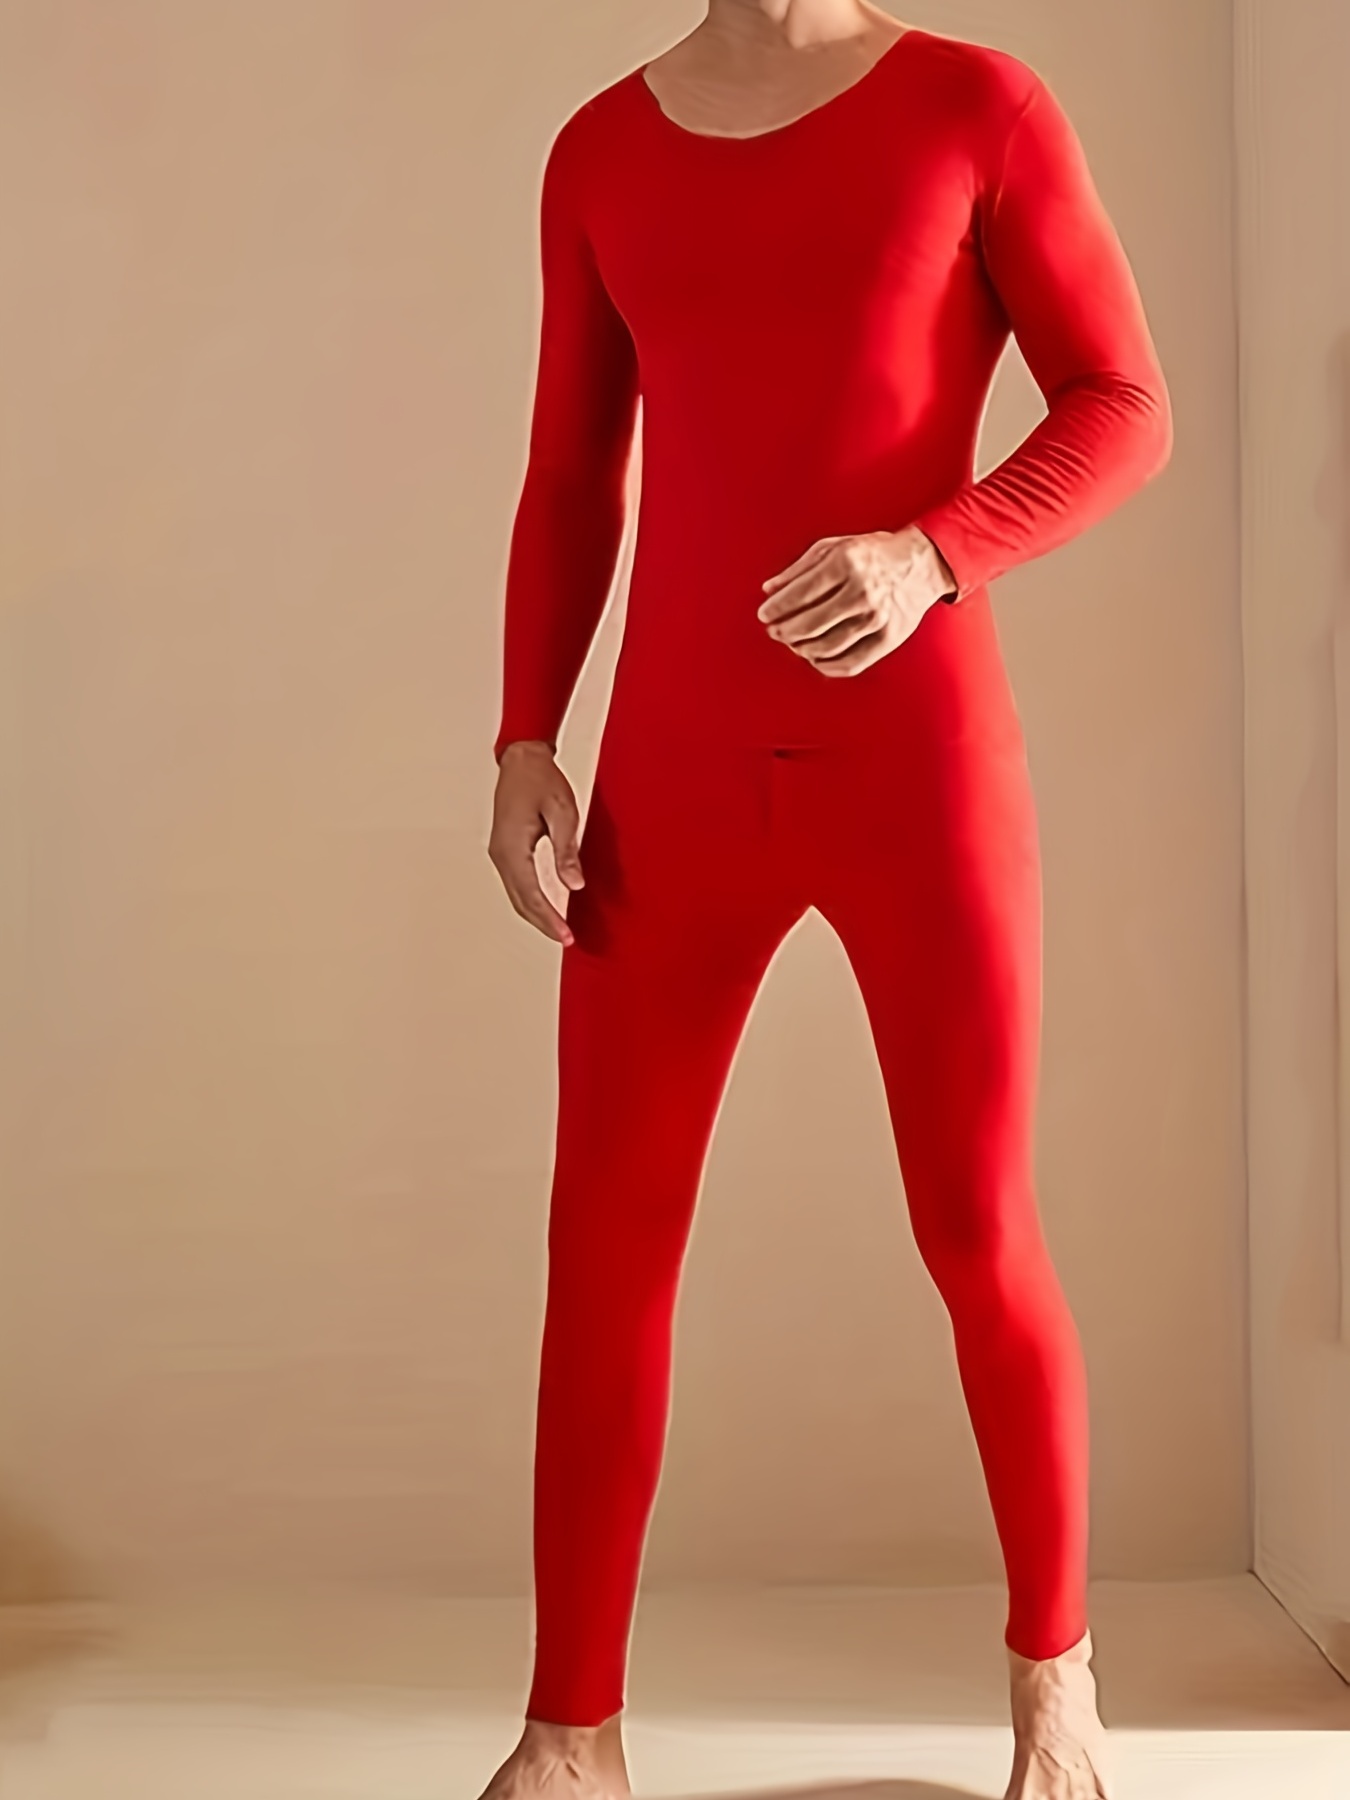 YWDJ Thermal Underwear for Men Men Fashion Trend Base Warm Pants Thin Style  U-convex Design Autumn Pants Red XXL 